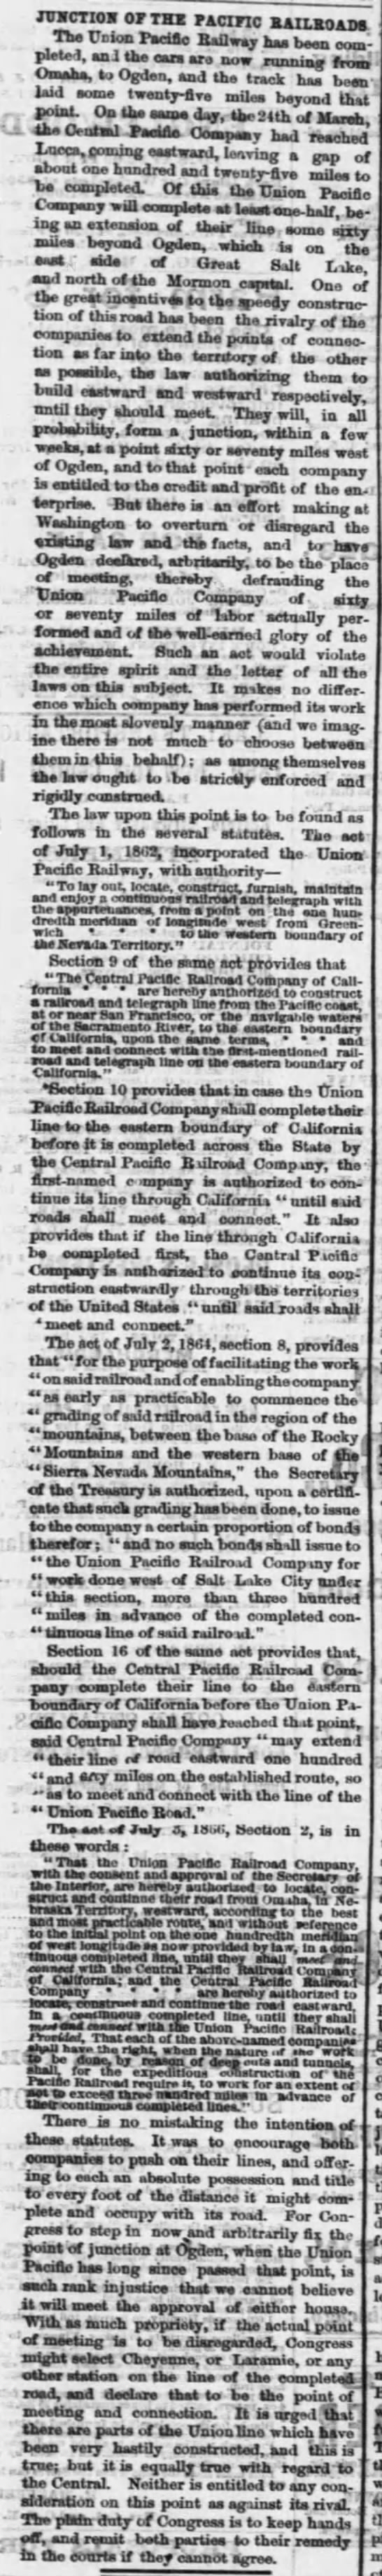 Transcontinental Railroad nears completion; junction dispute arises, Apr 1869 - 